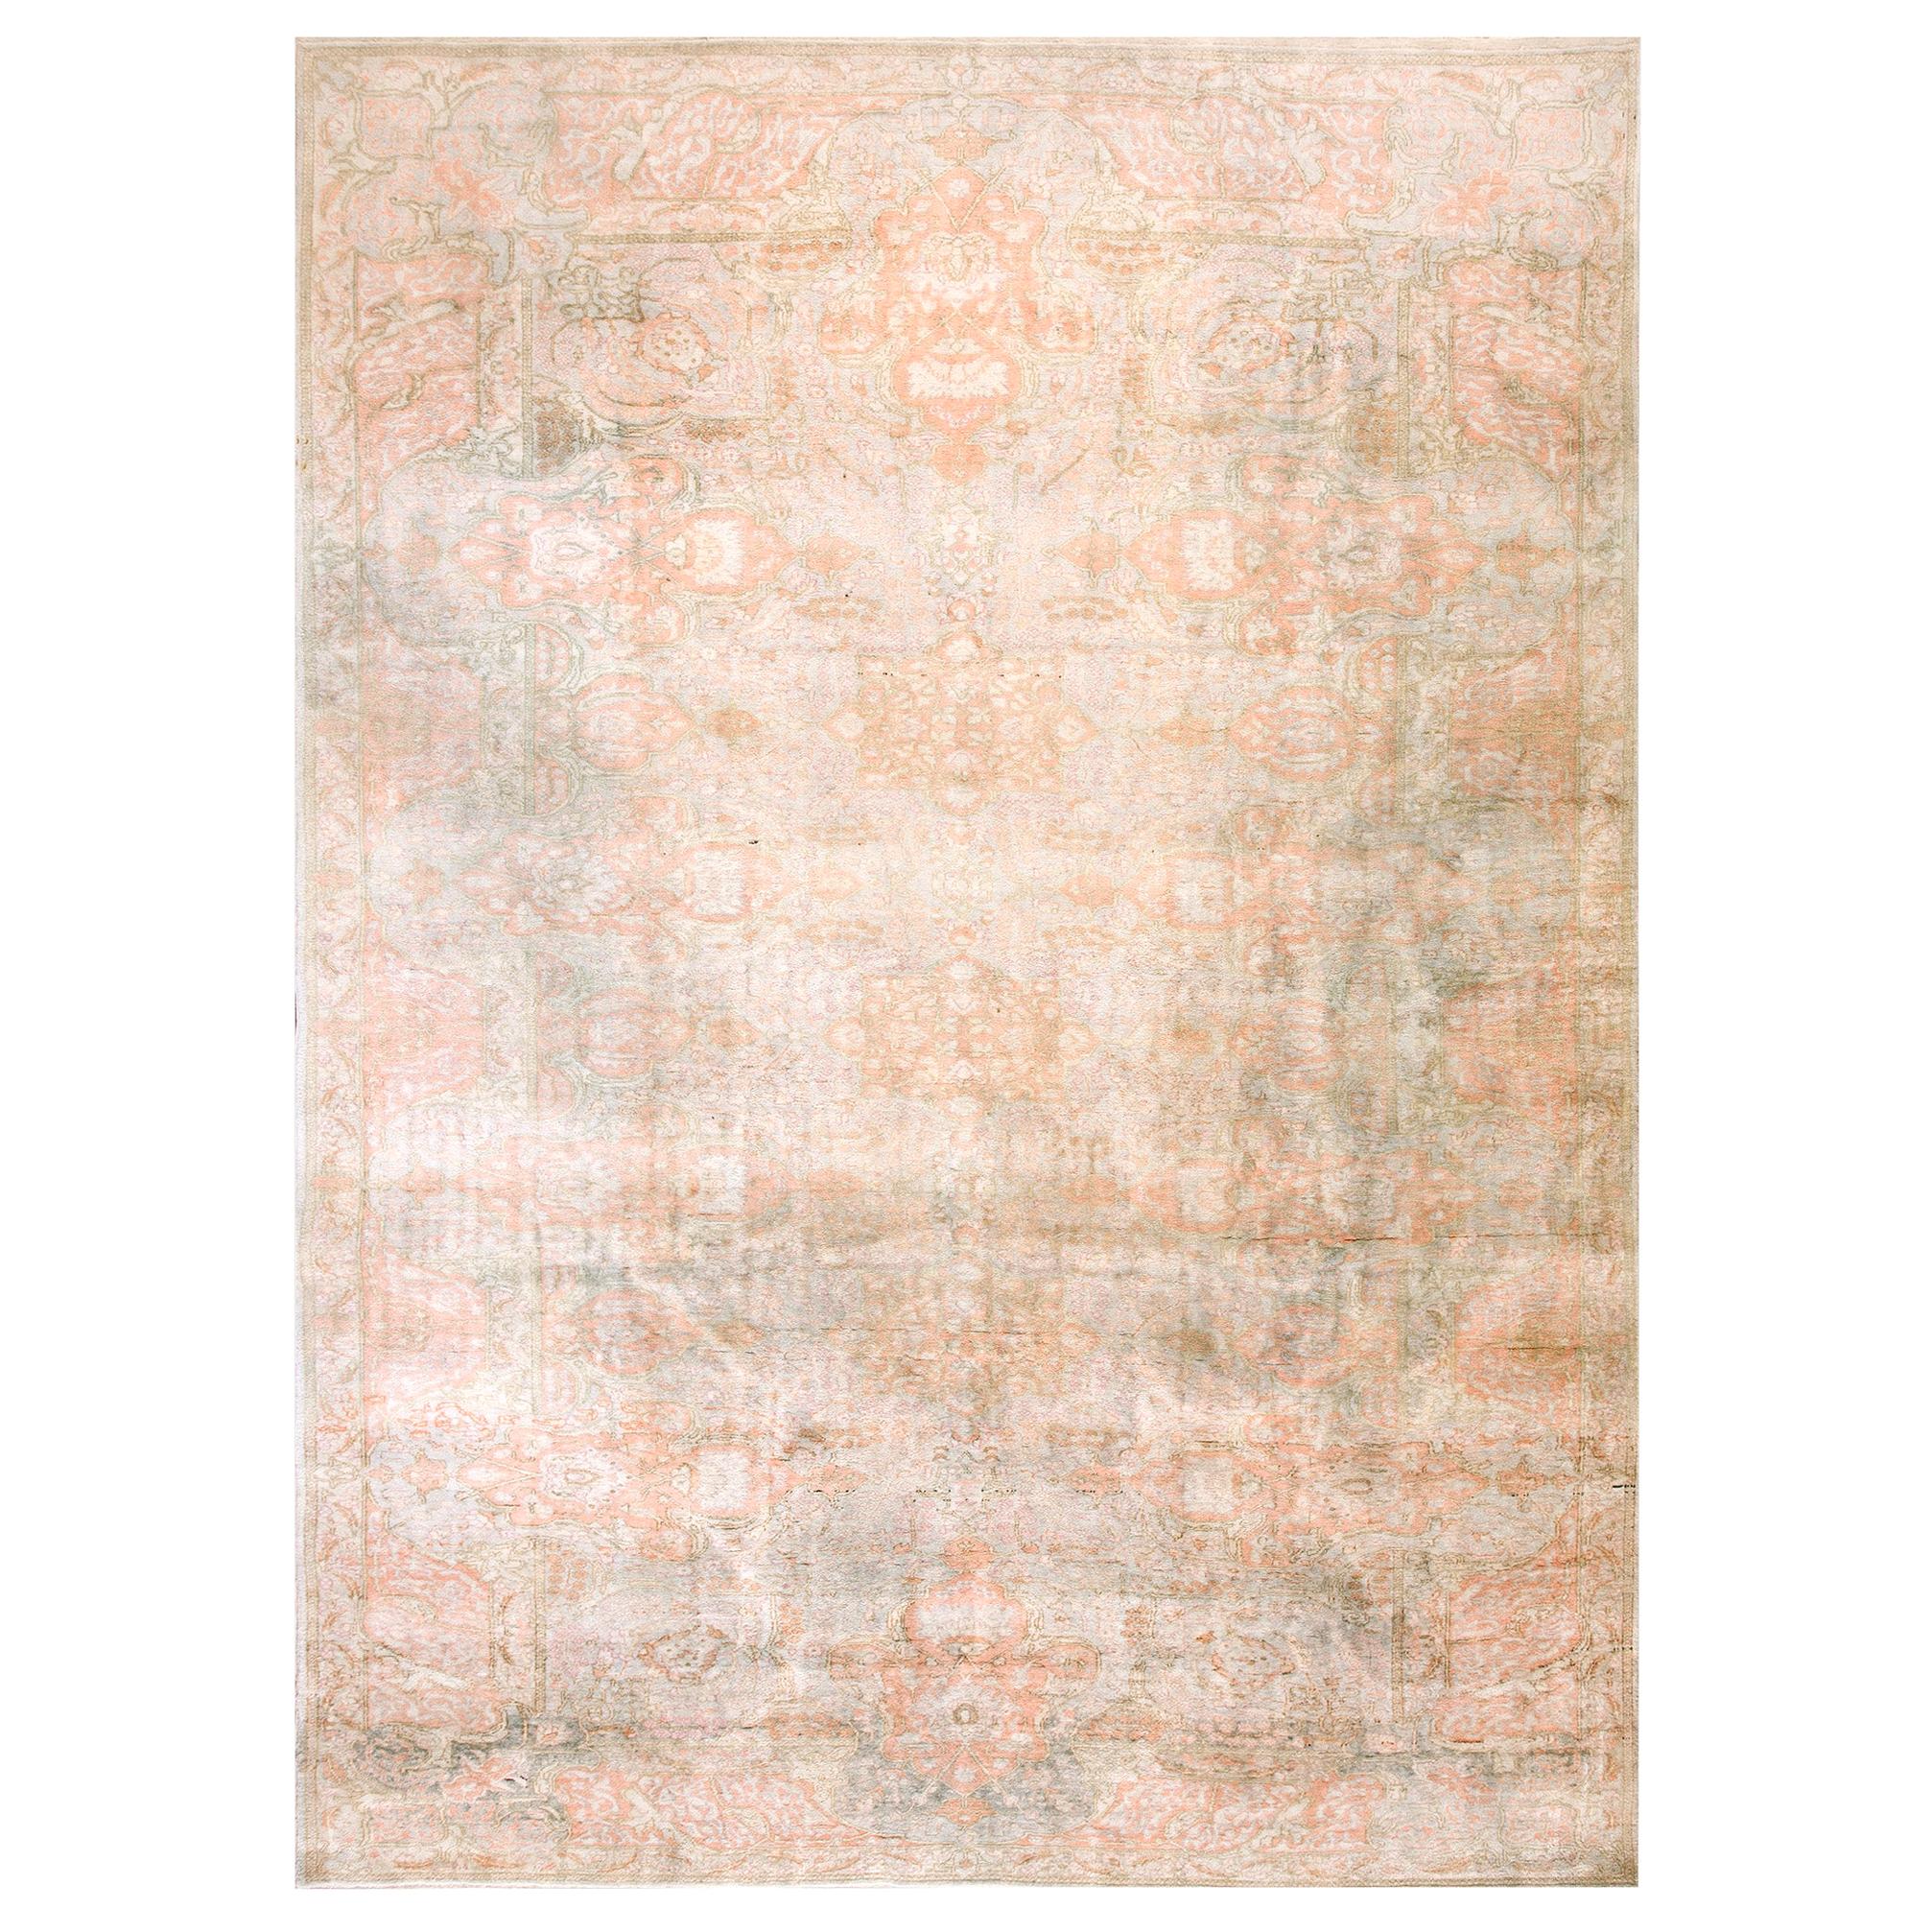 Early 20th Century Turkish Cotton Kayseri Carpet ( 9' x 12'6" - 275 x 380 )